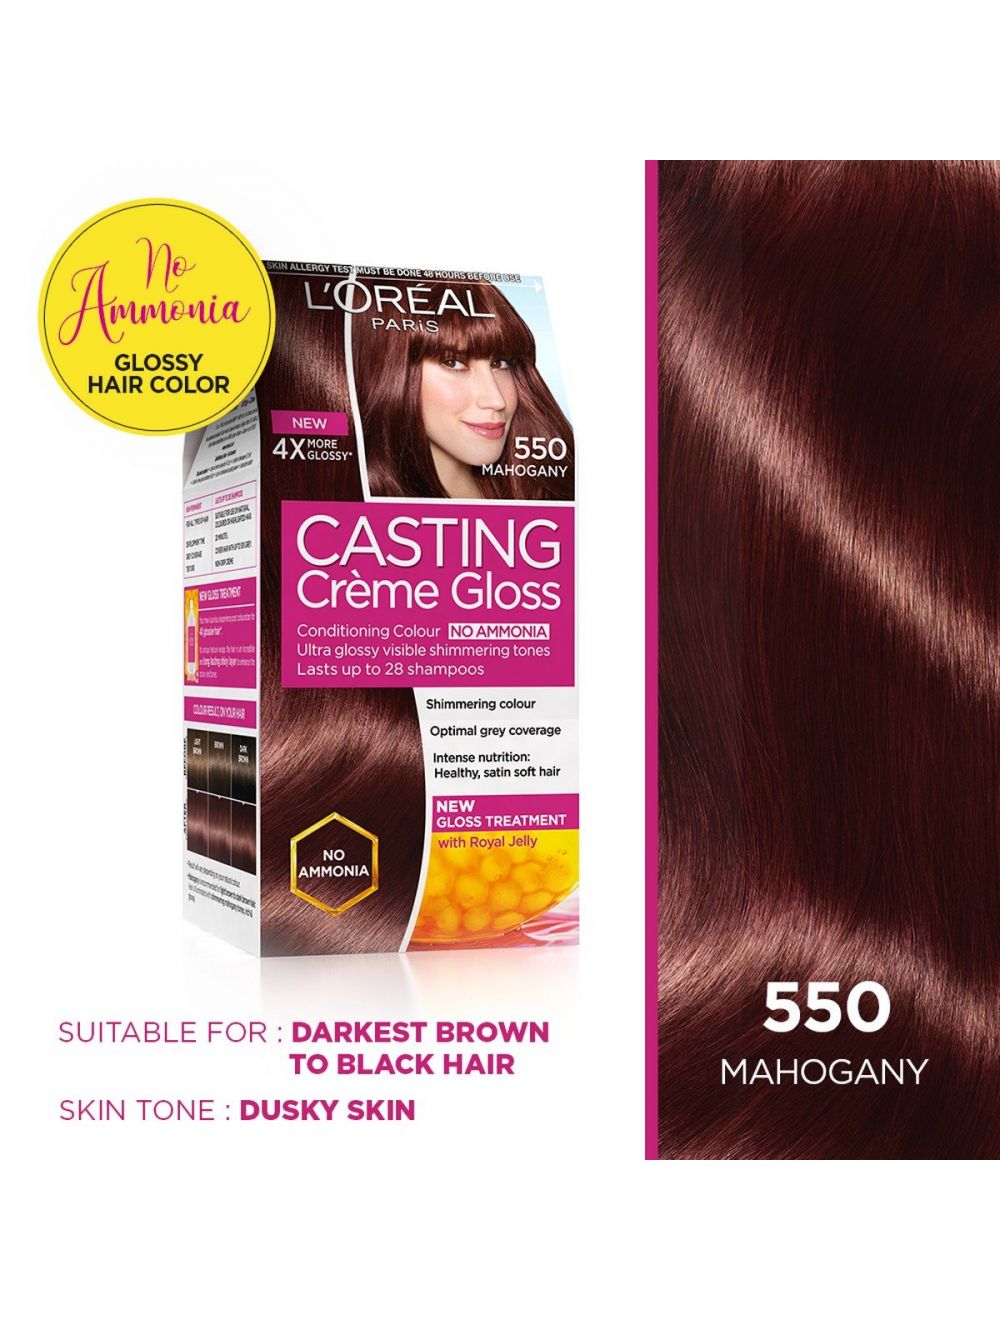 L'Oreal Paris Casting Creme Gloss Hair Color, Mahogany 550